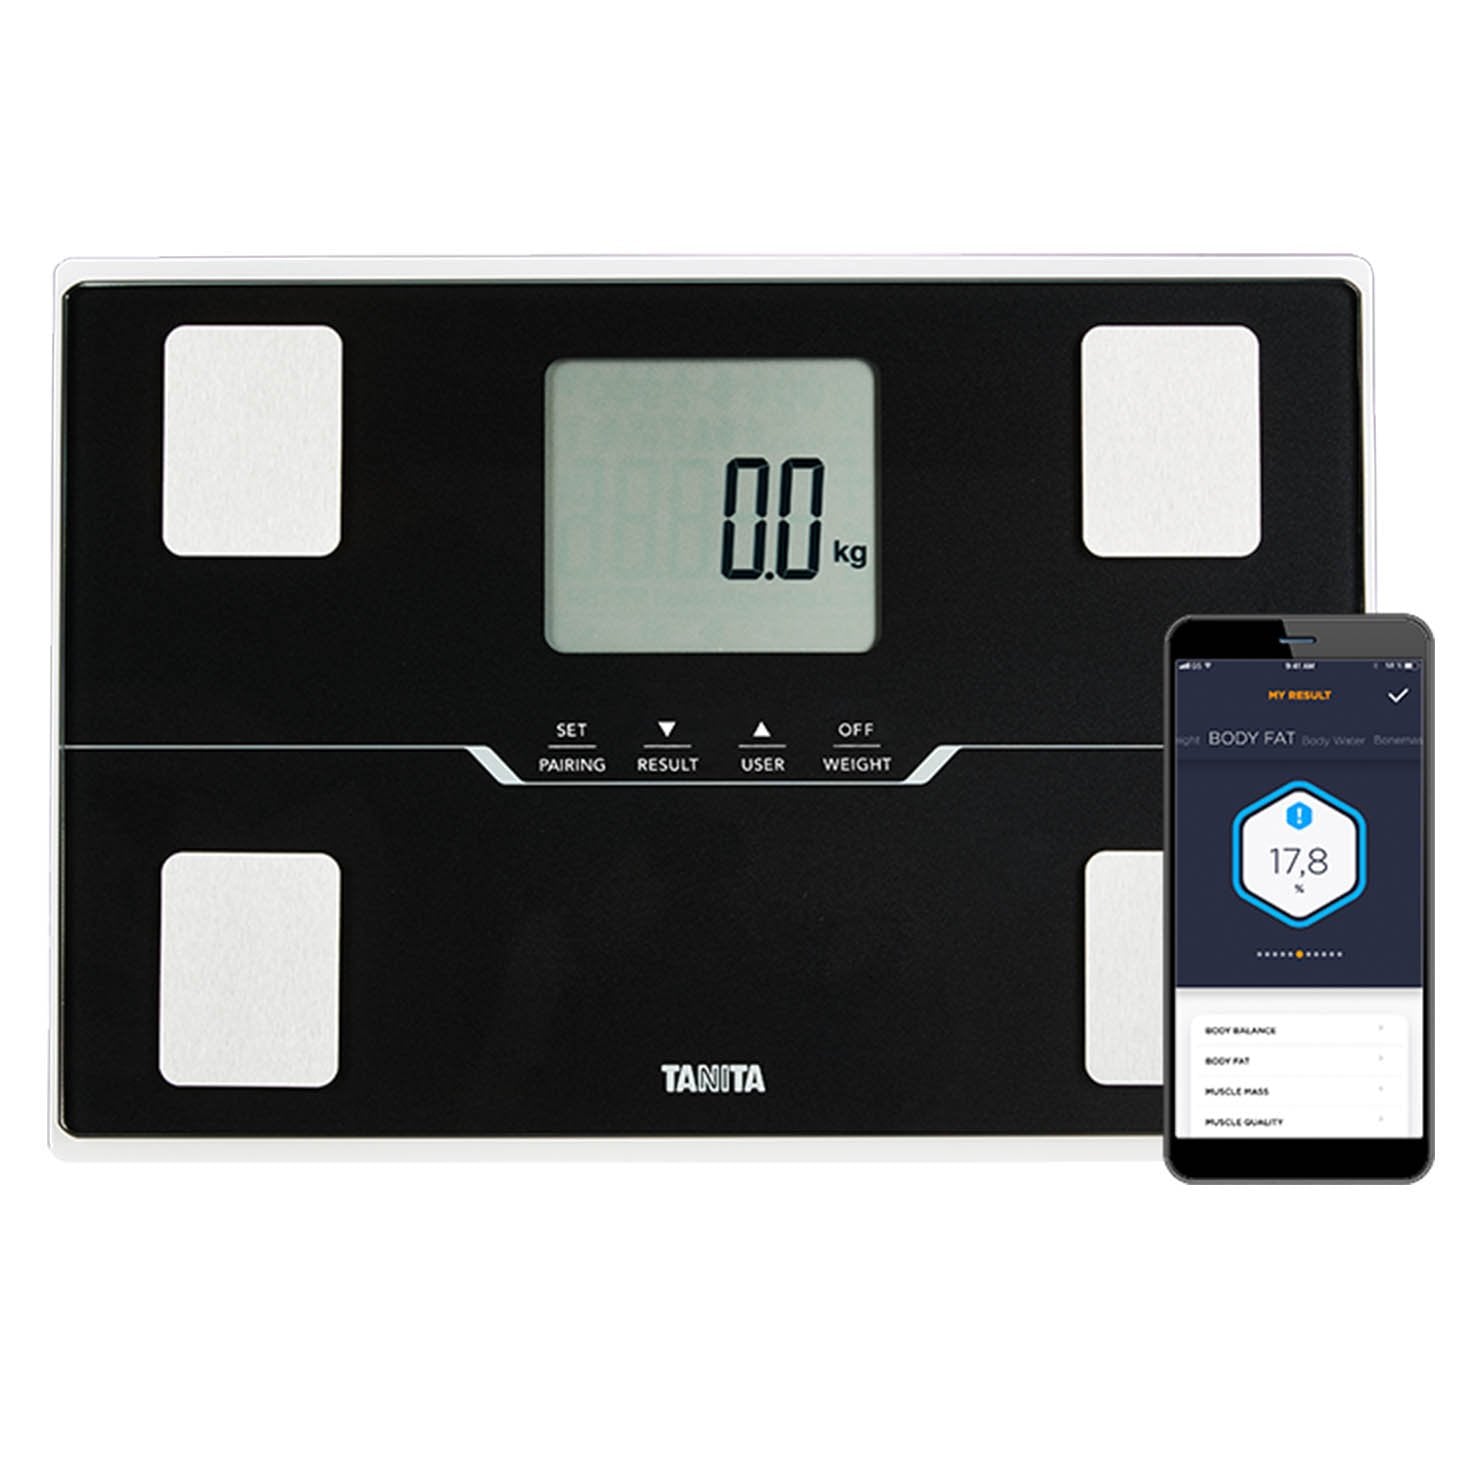 Tanita BC-401 Body Composition Monitor Review